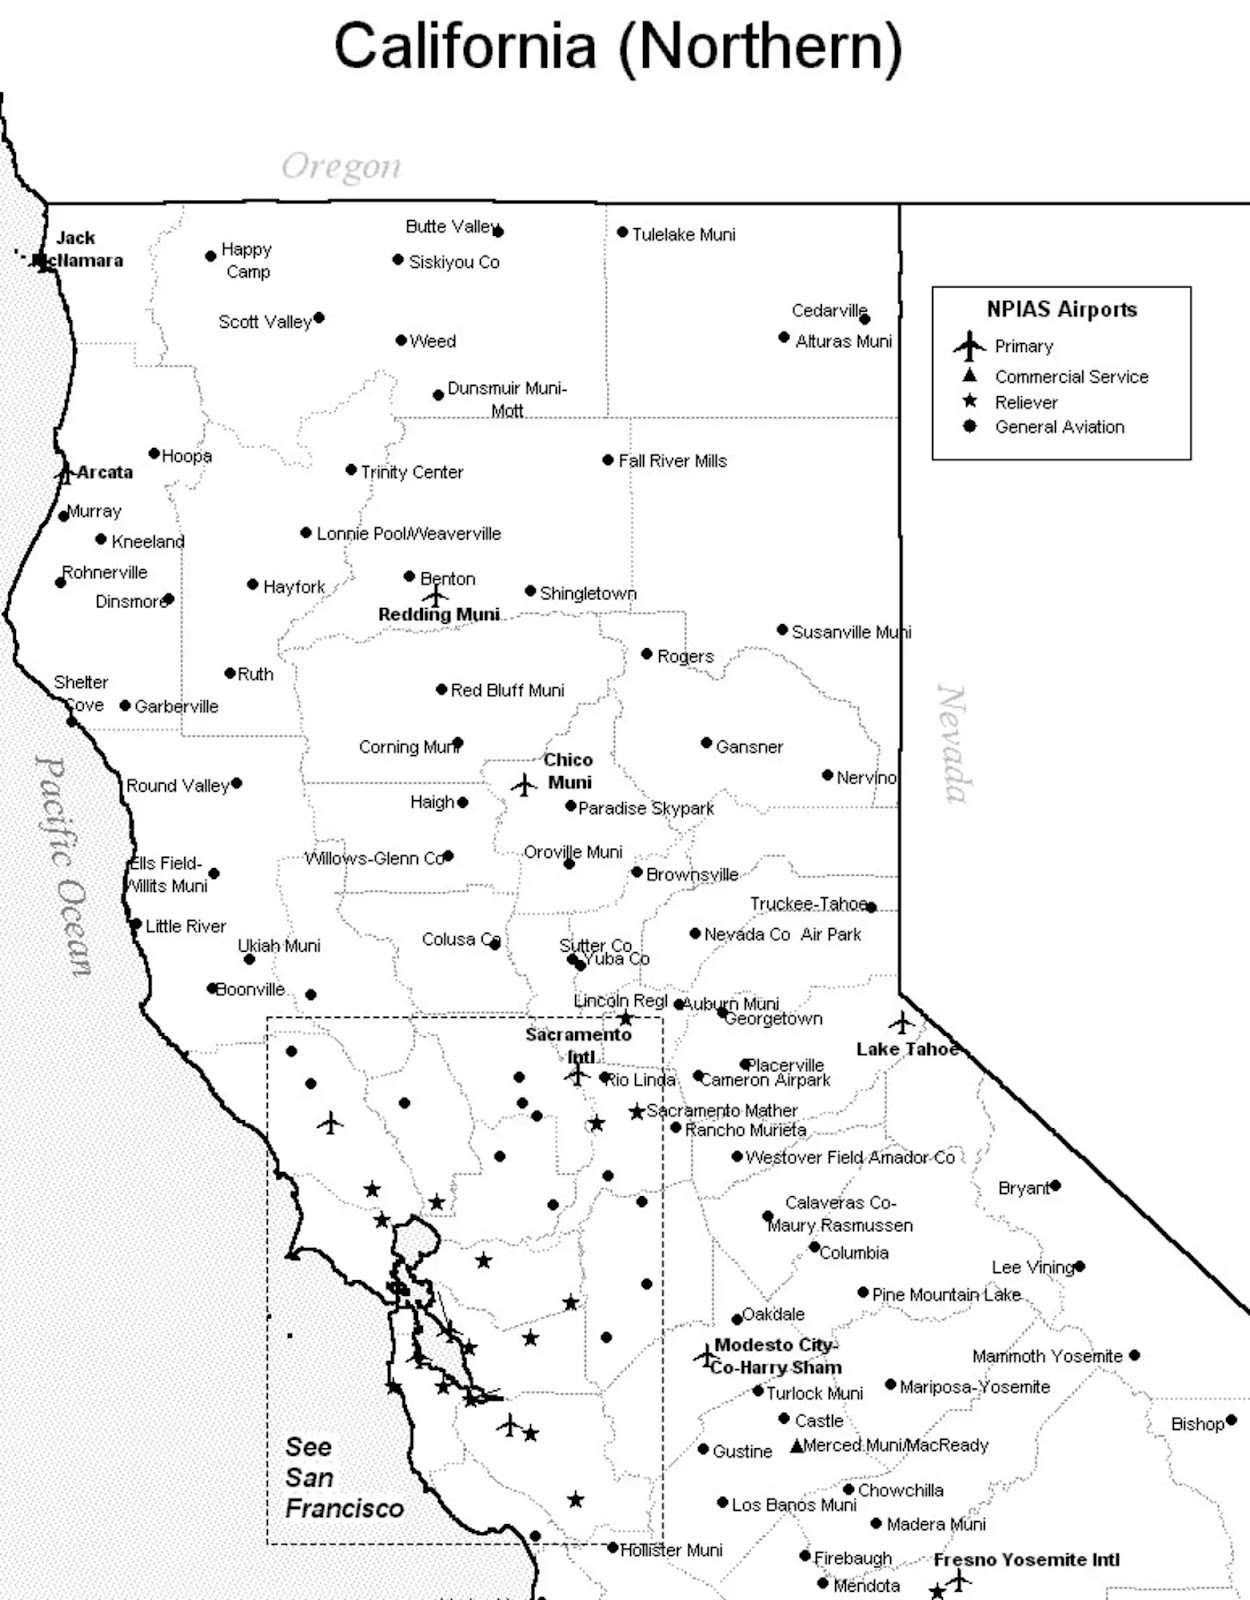 California-airports-map